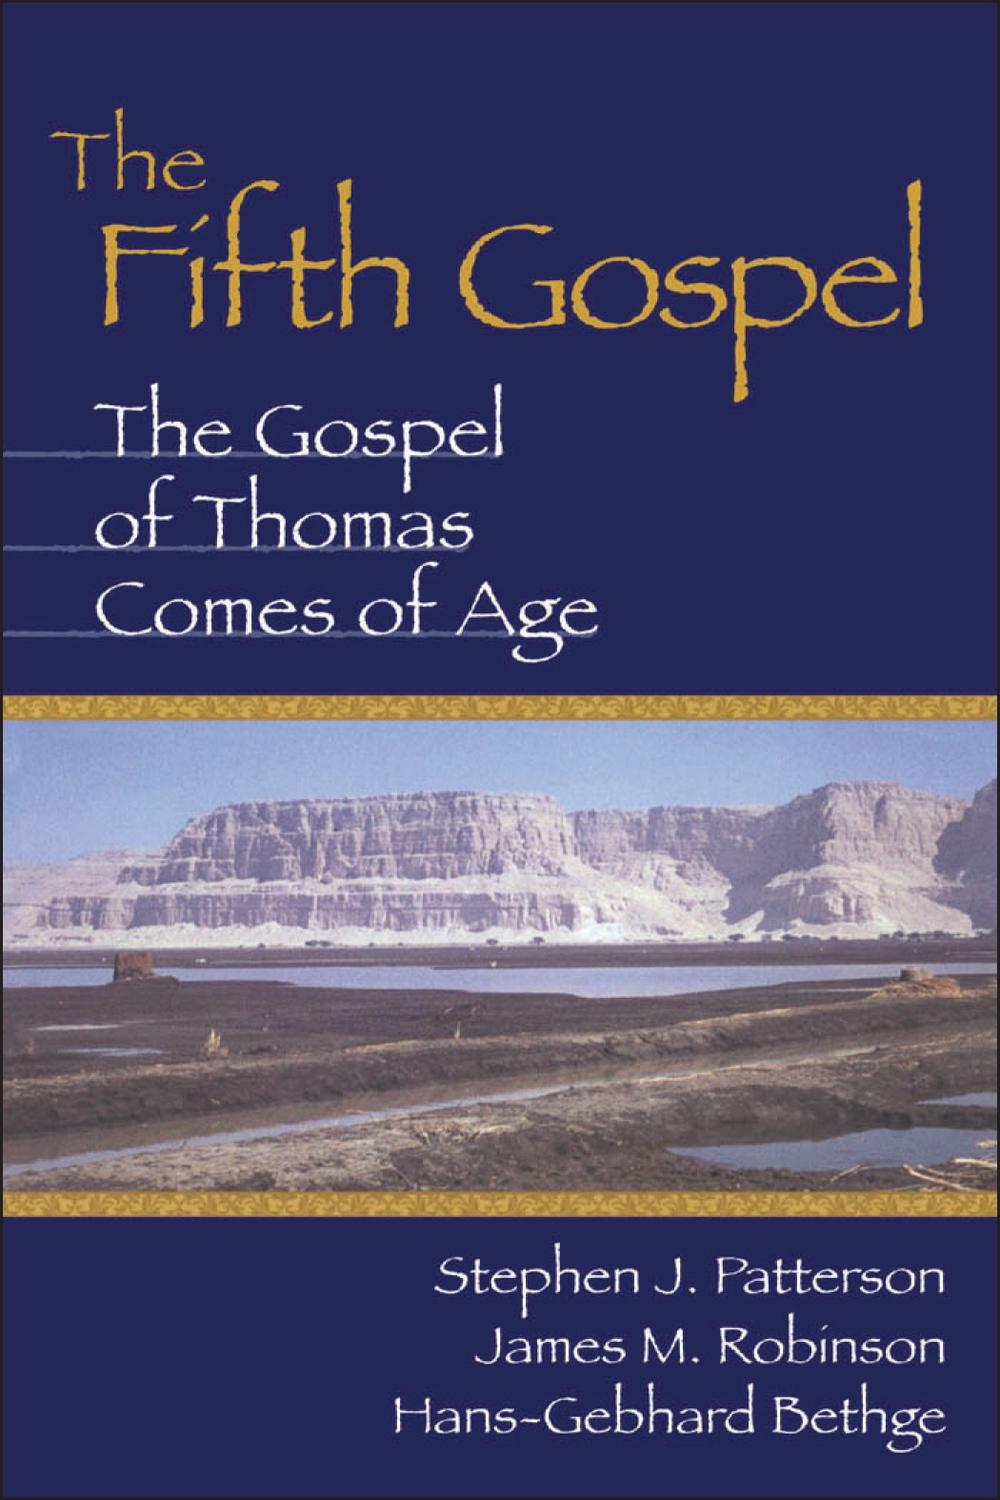 The Fifth Gospel - Stephen J. Patterson, Hans-Gebhard Bethge, James M. Robinson